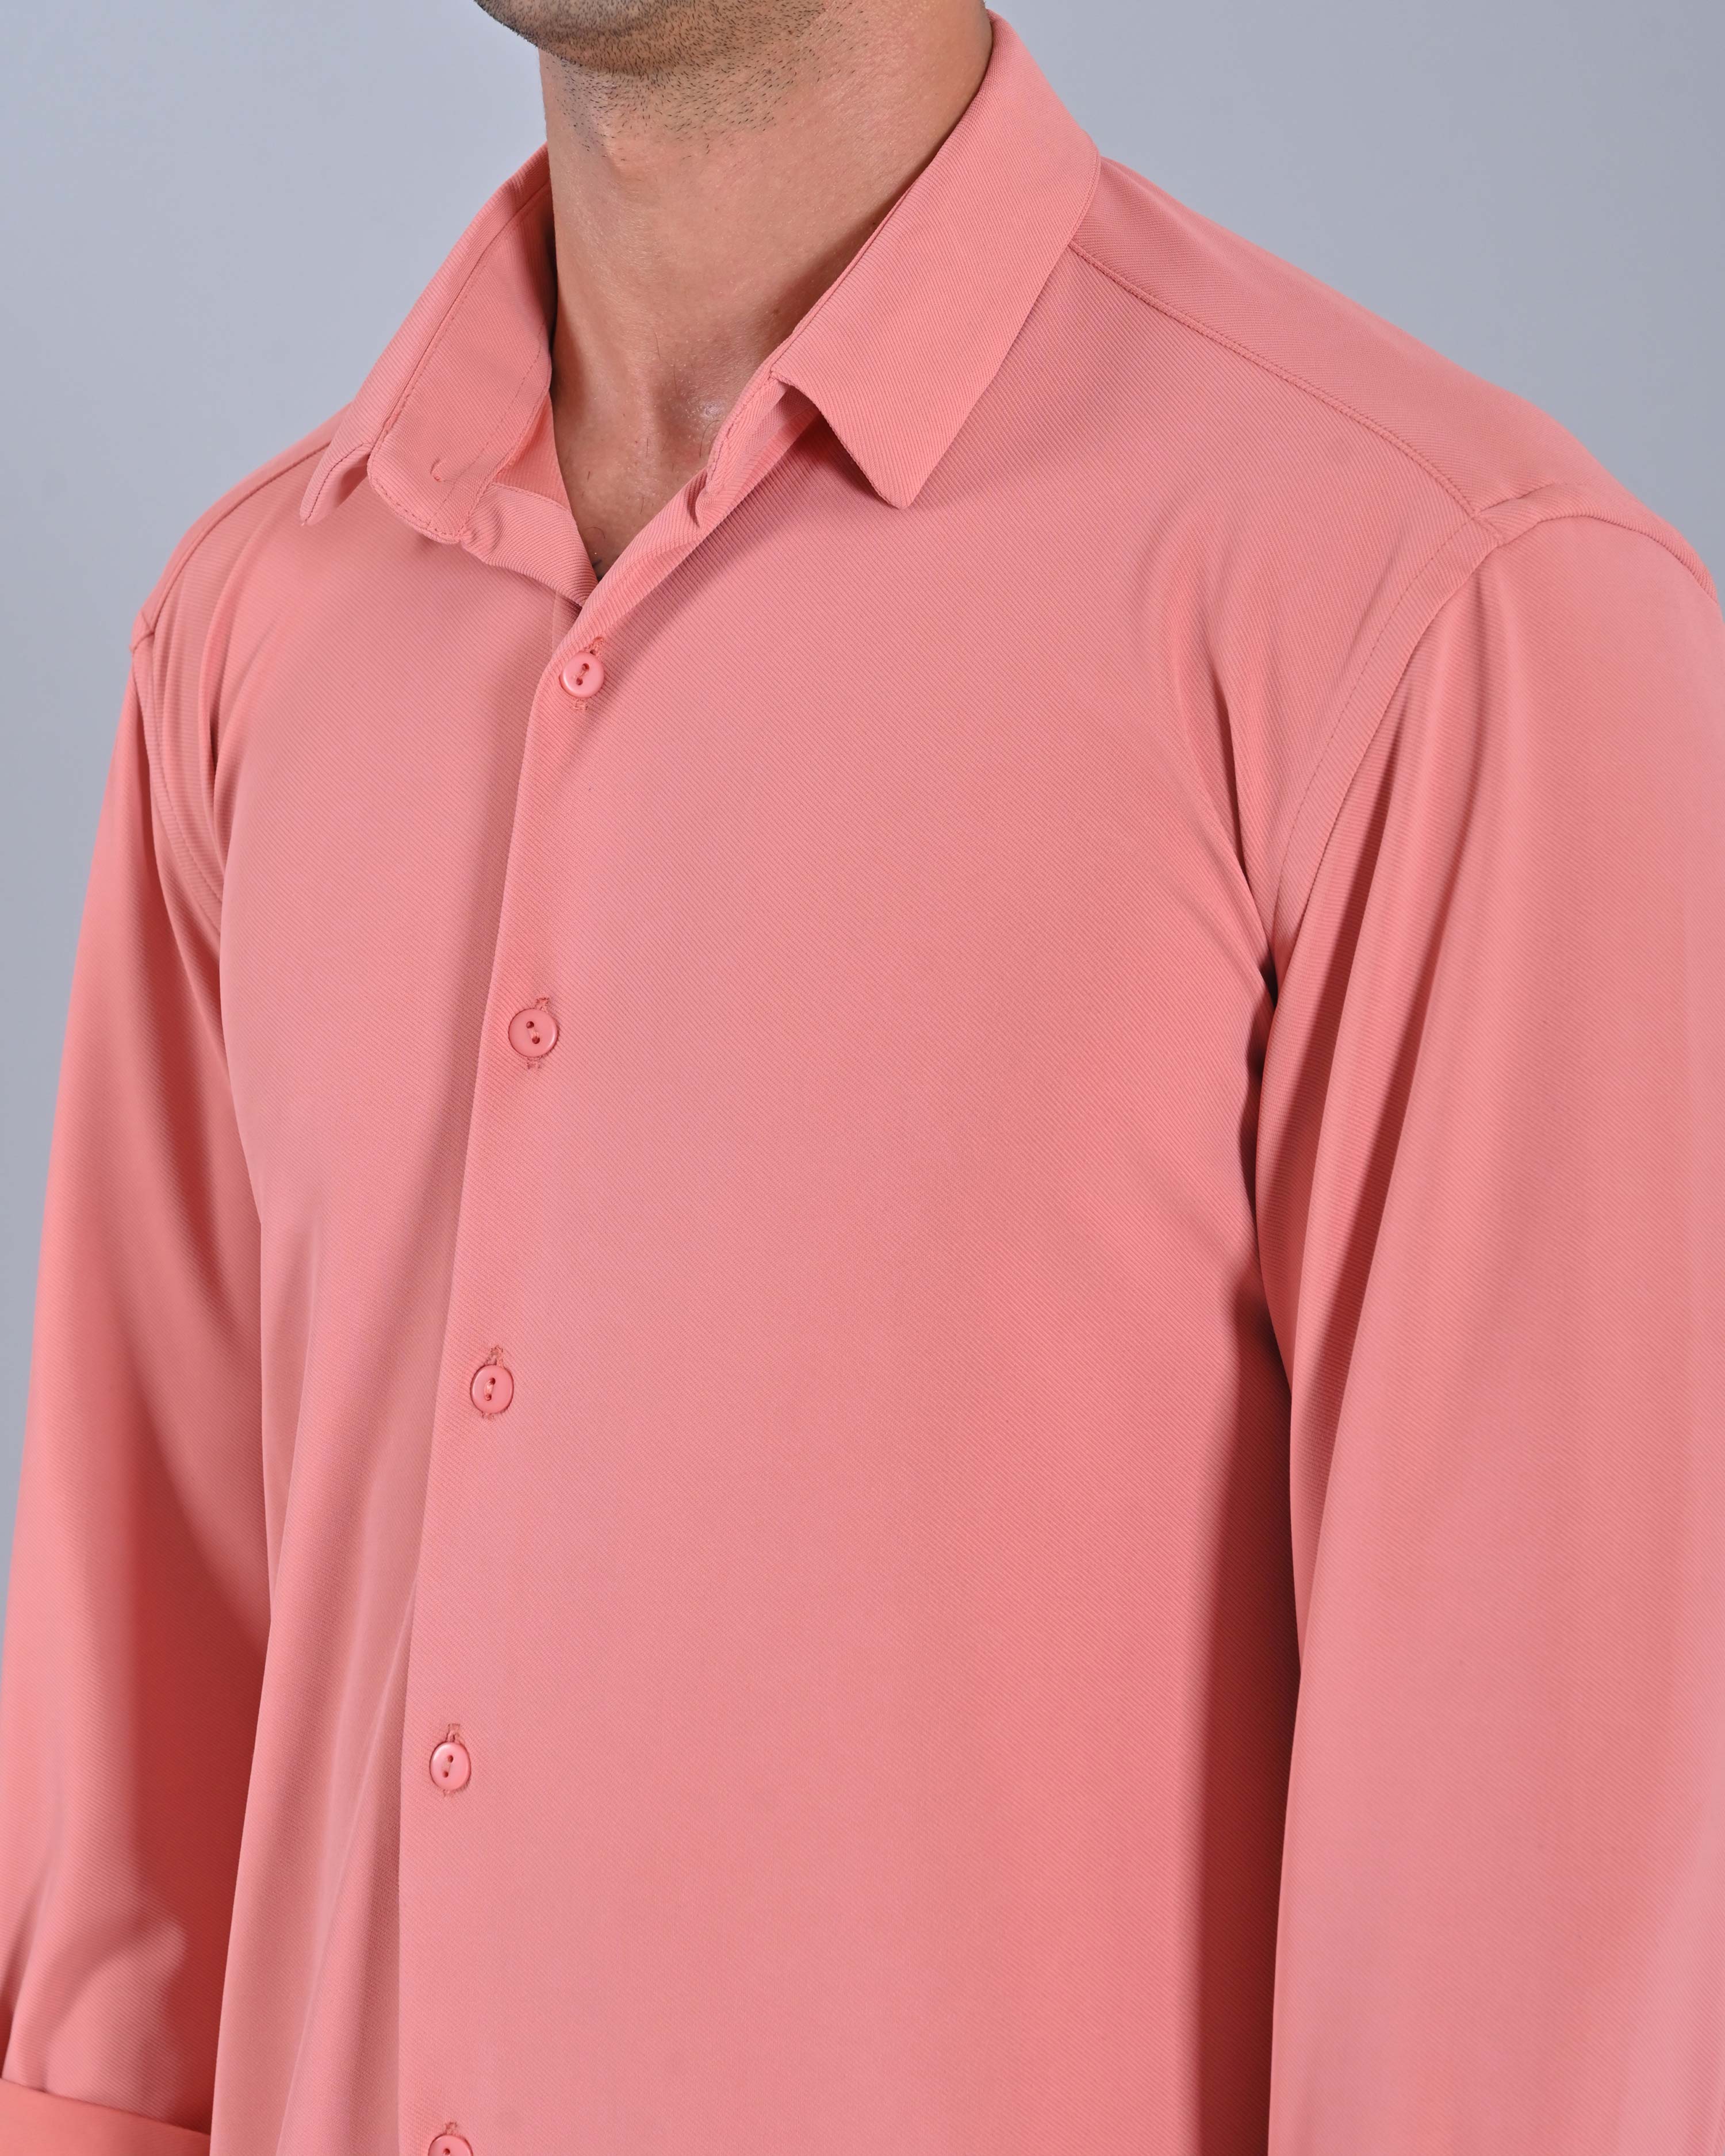 Shop Men's Salmon Pink Full Sleeve Cross Knit Shirt